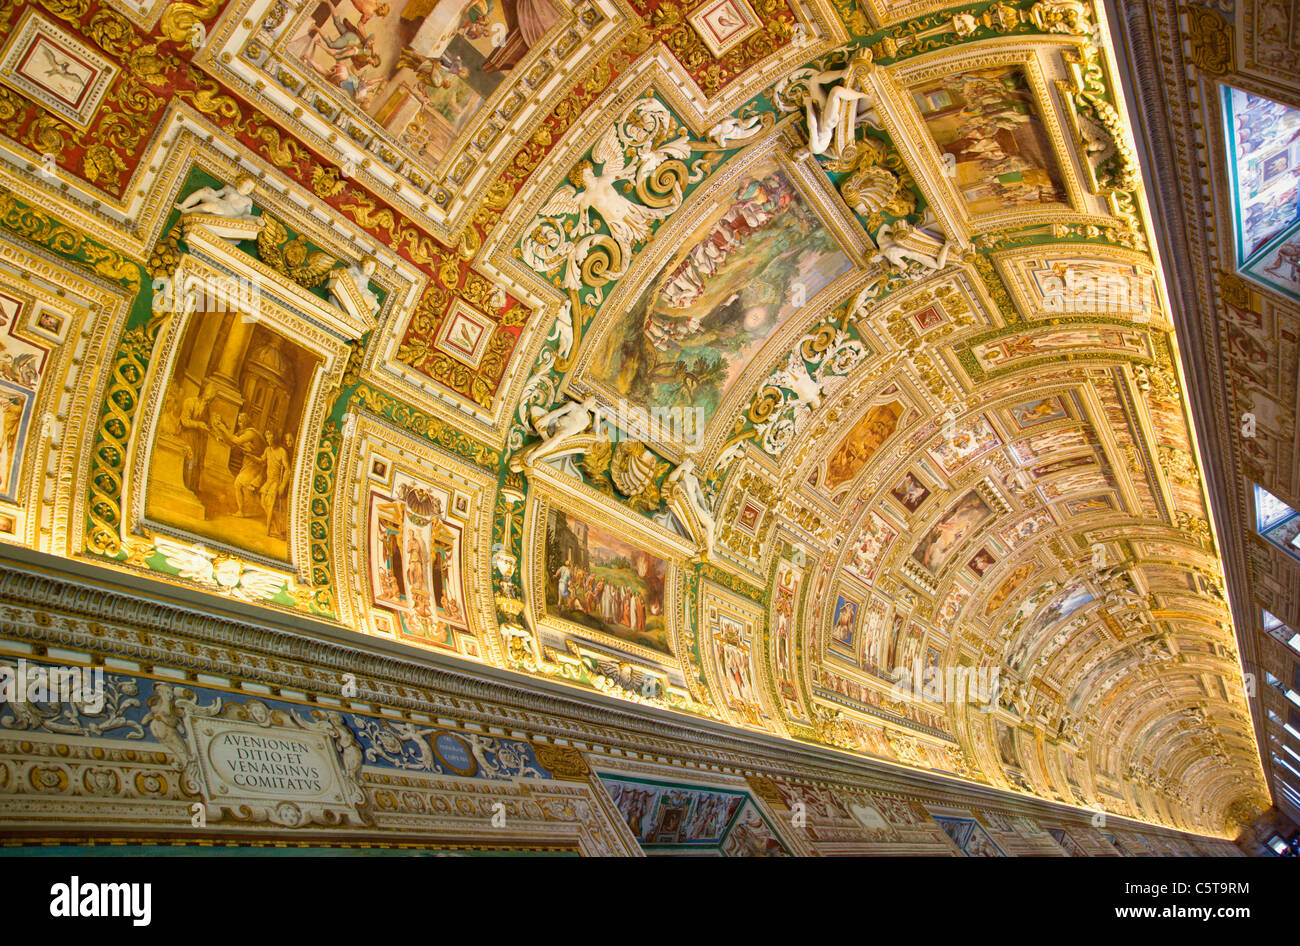 Italien, Rom, Vatikan, Museum, Galerie der Landkarten, Decke Malerei, niedrigen Winkel Ansicht Stockfoto